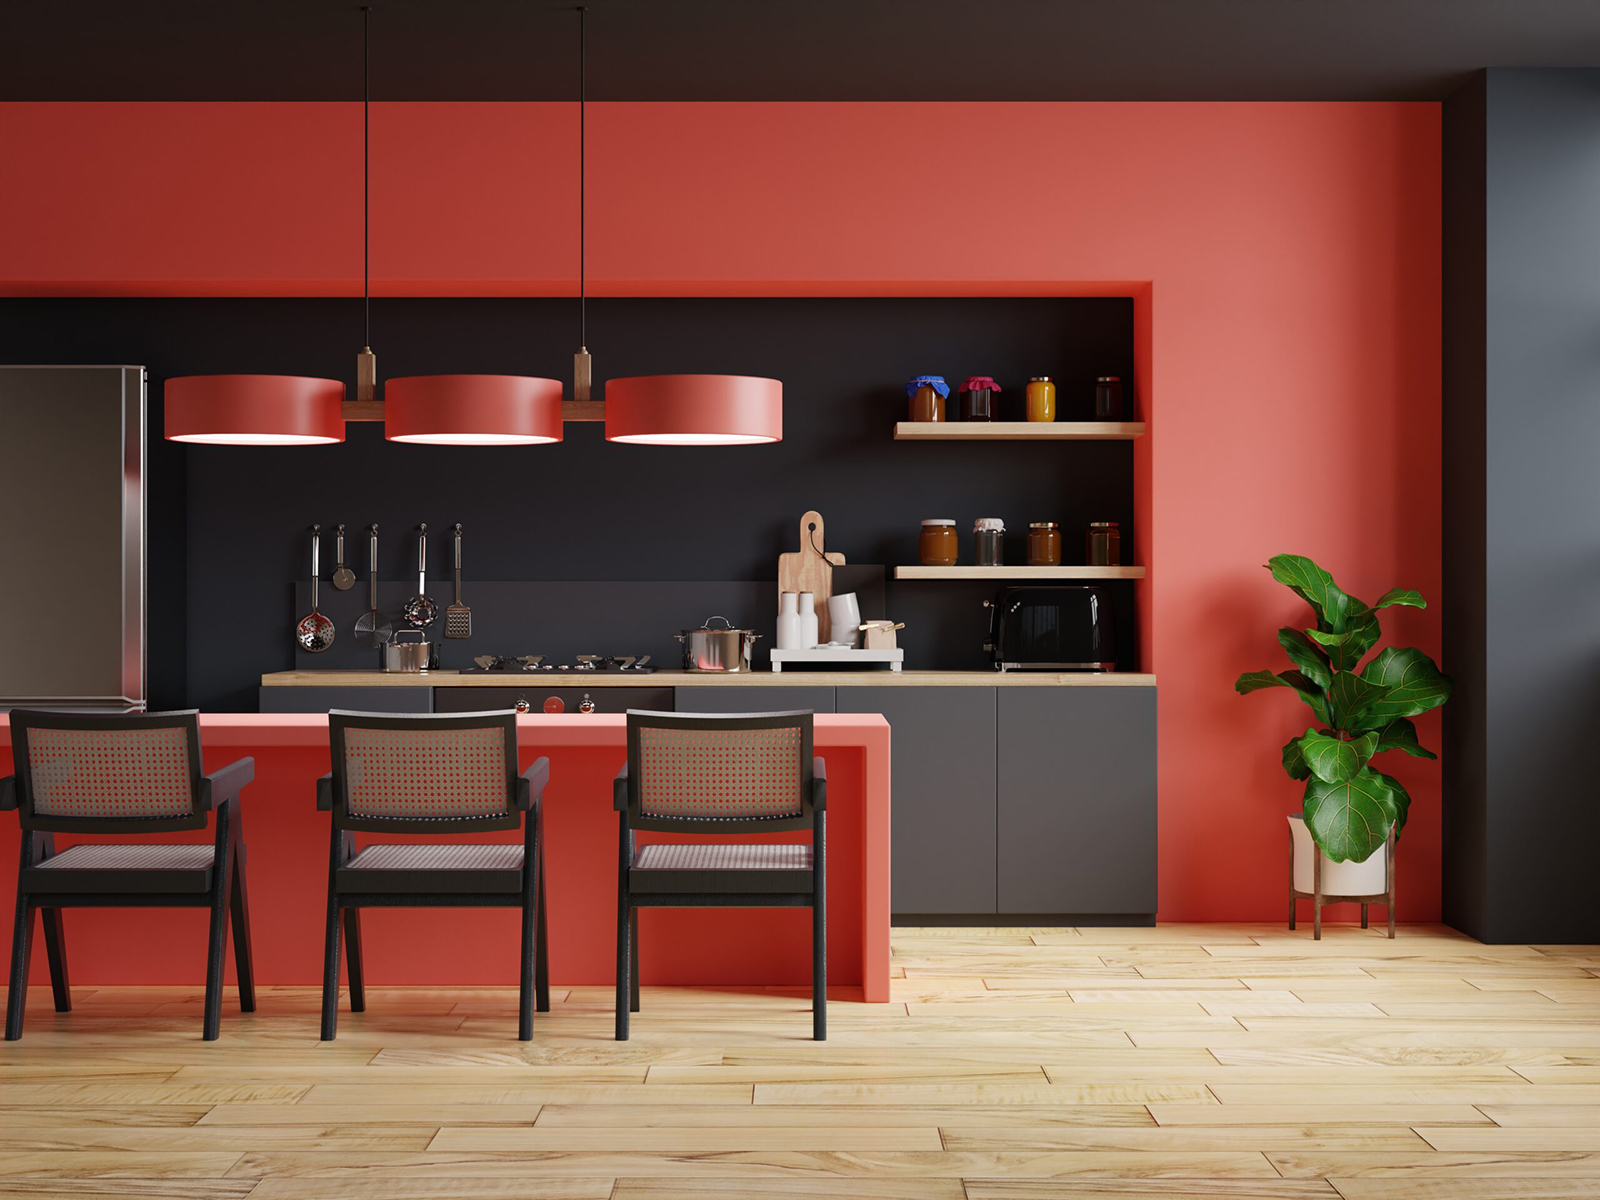 modern-style-kitchen-interior-design-with-red-and-2022-12-16-11-58-26-utc-kitchen04